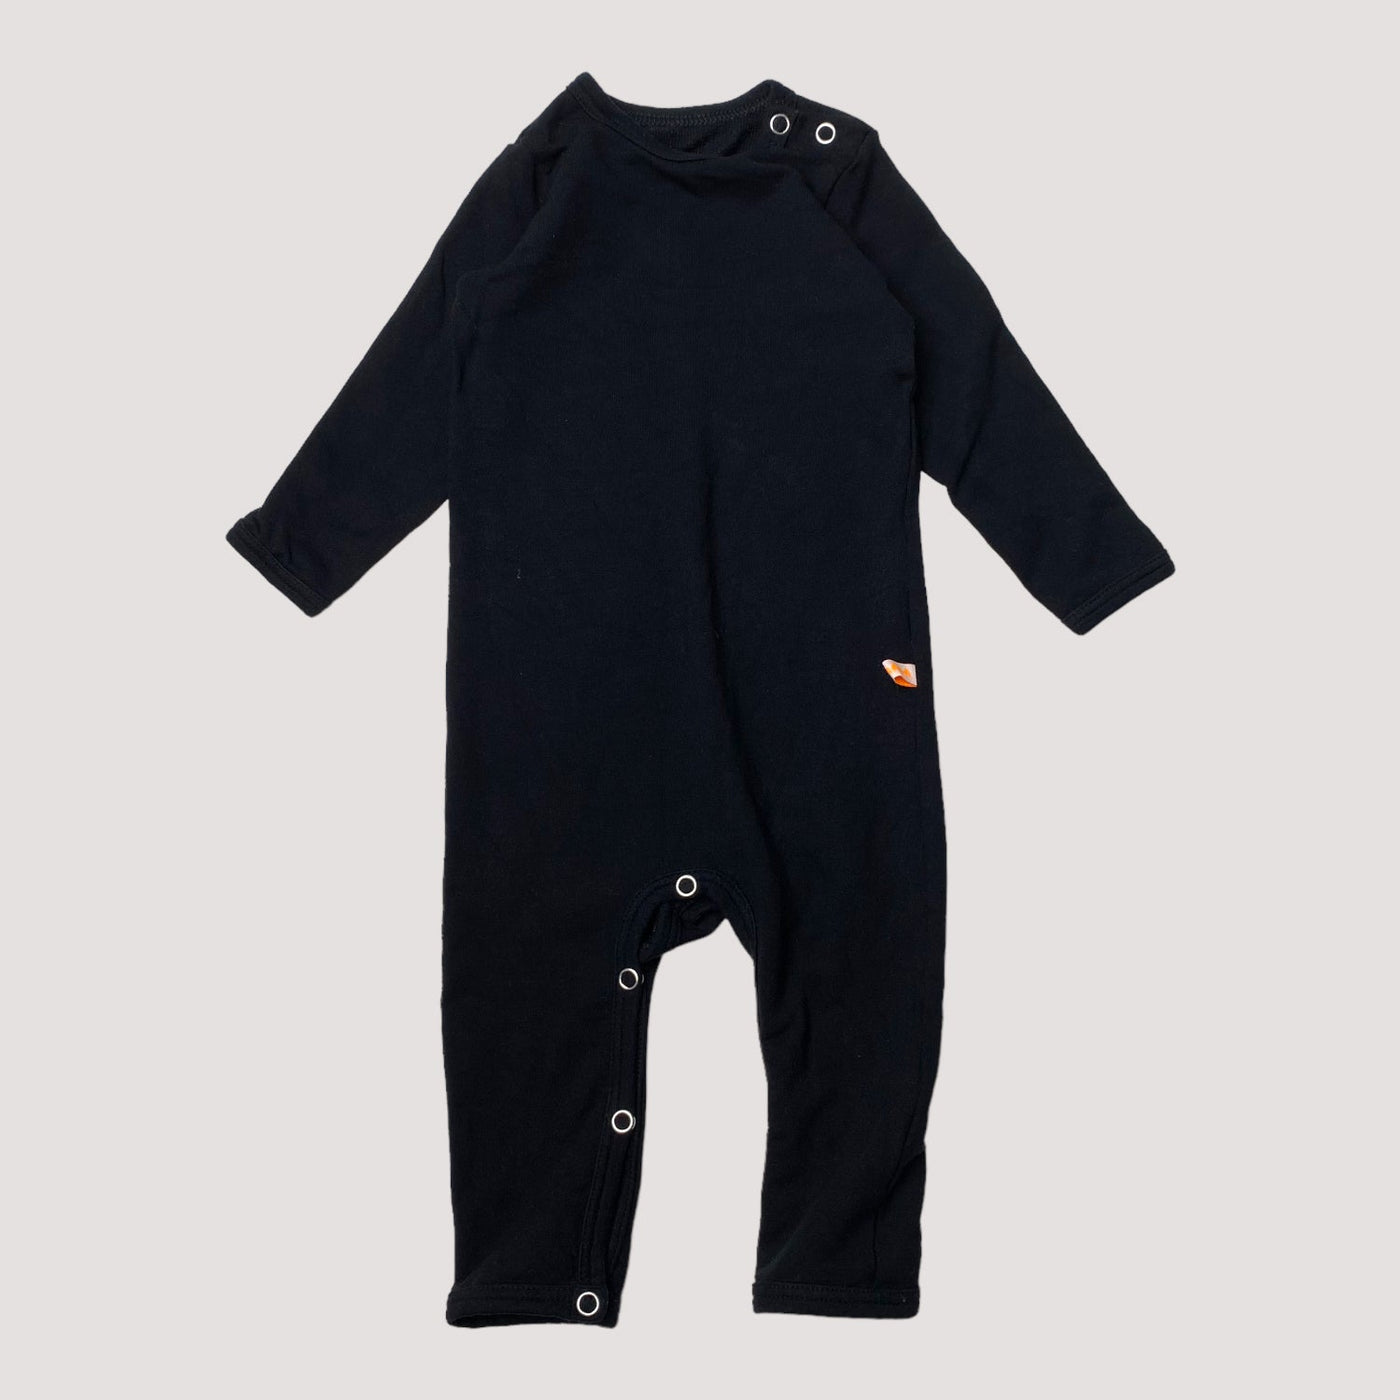 Vimma jumpsuit, black | 70cm